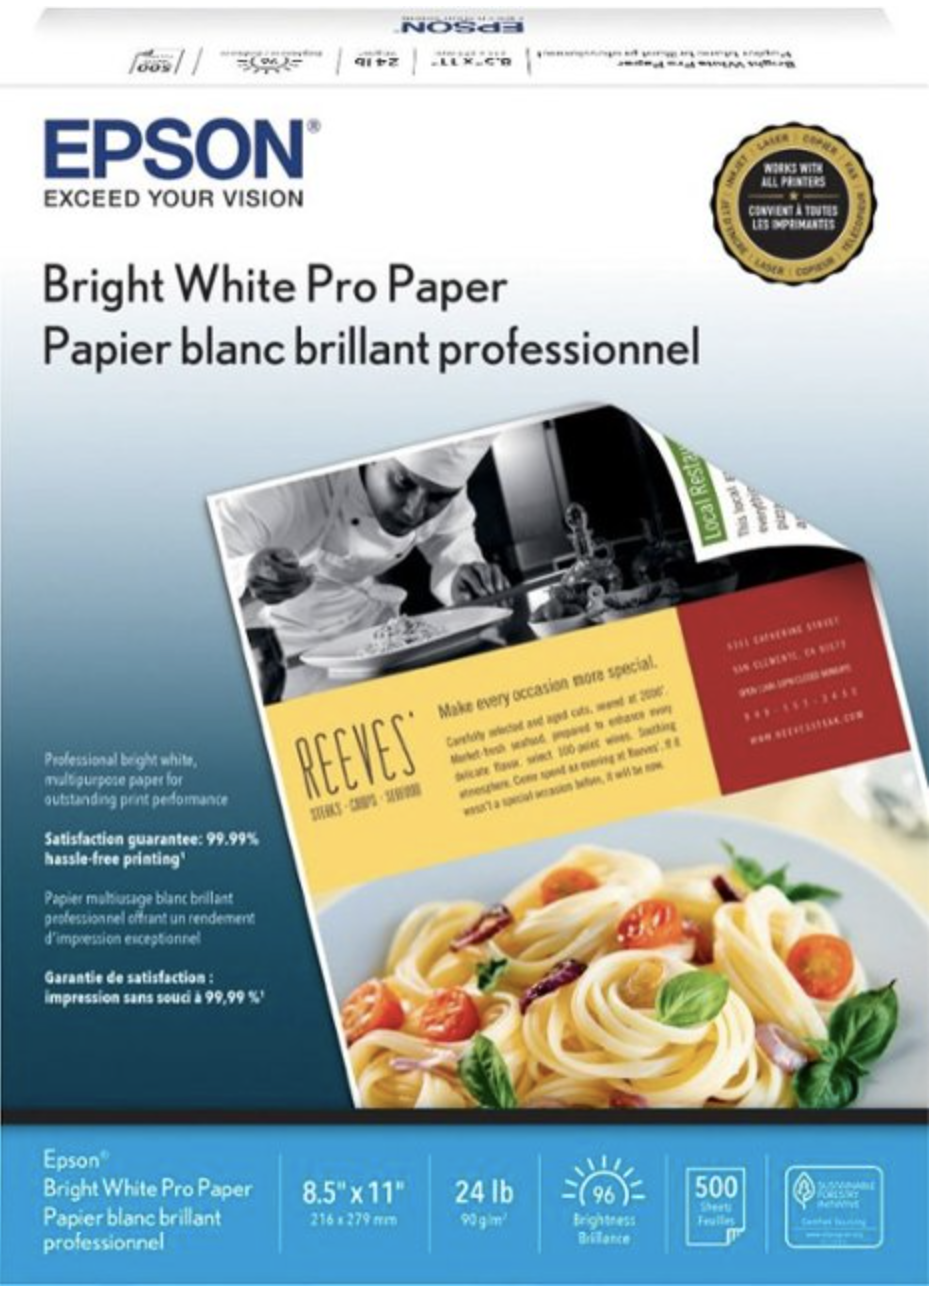 Basics Multipurpose Copy Printer Paper - 96 Bright White, 8.5 X 11  Inche